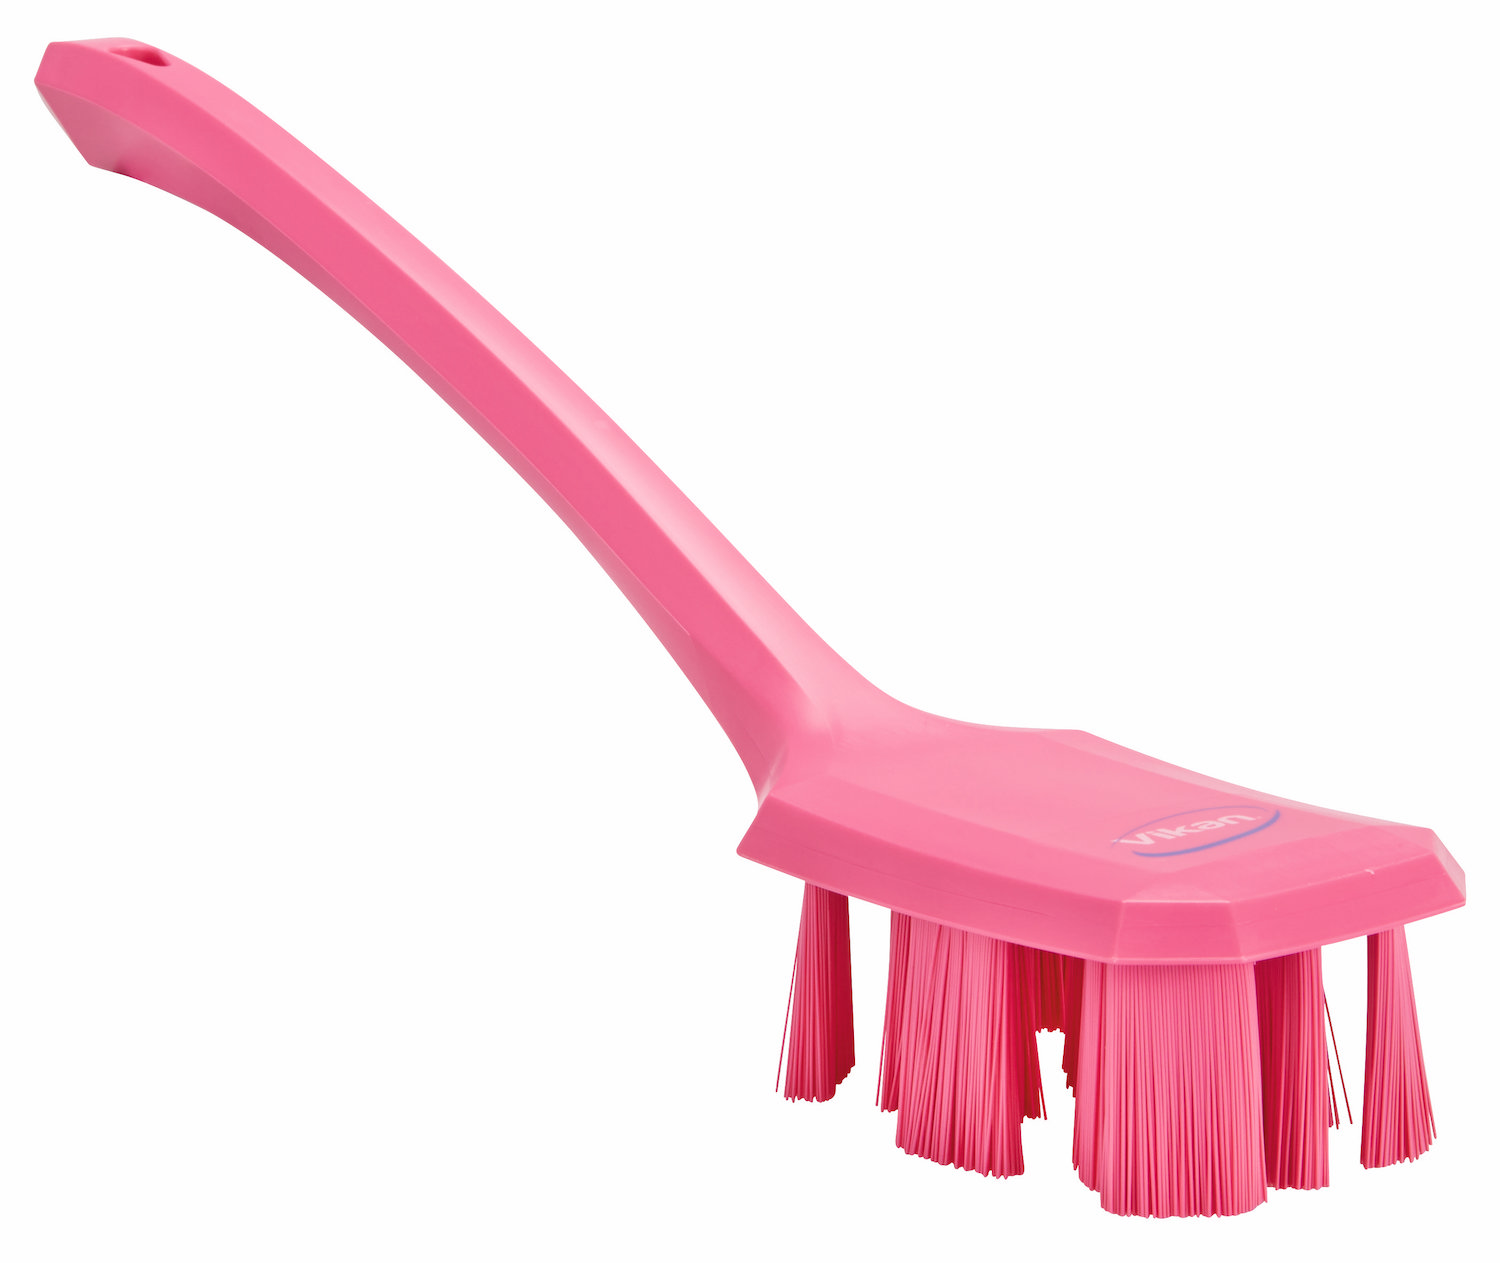 UST Hand Brush w/long Handle, 395 mm,
Hard, Pink